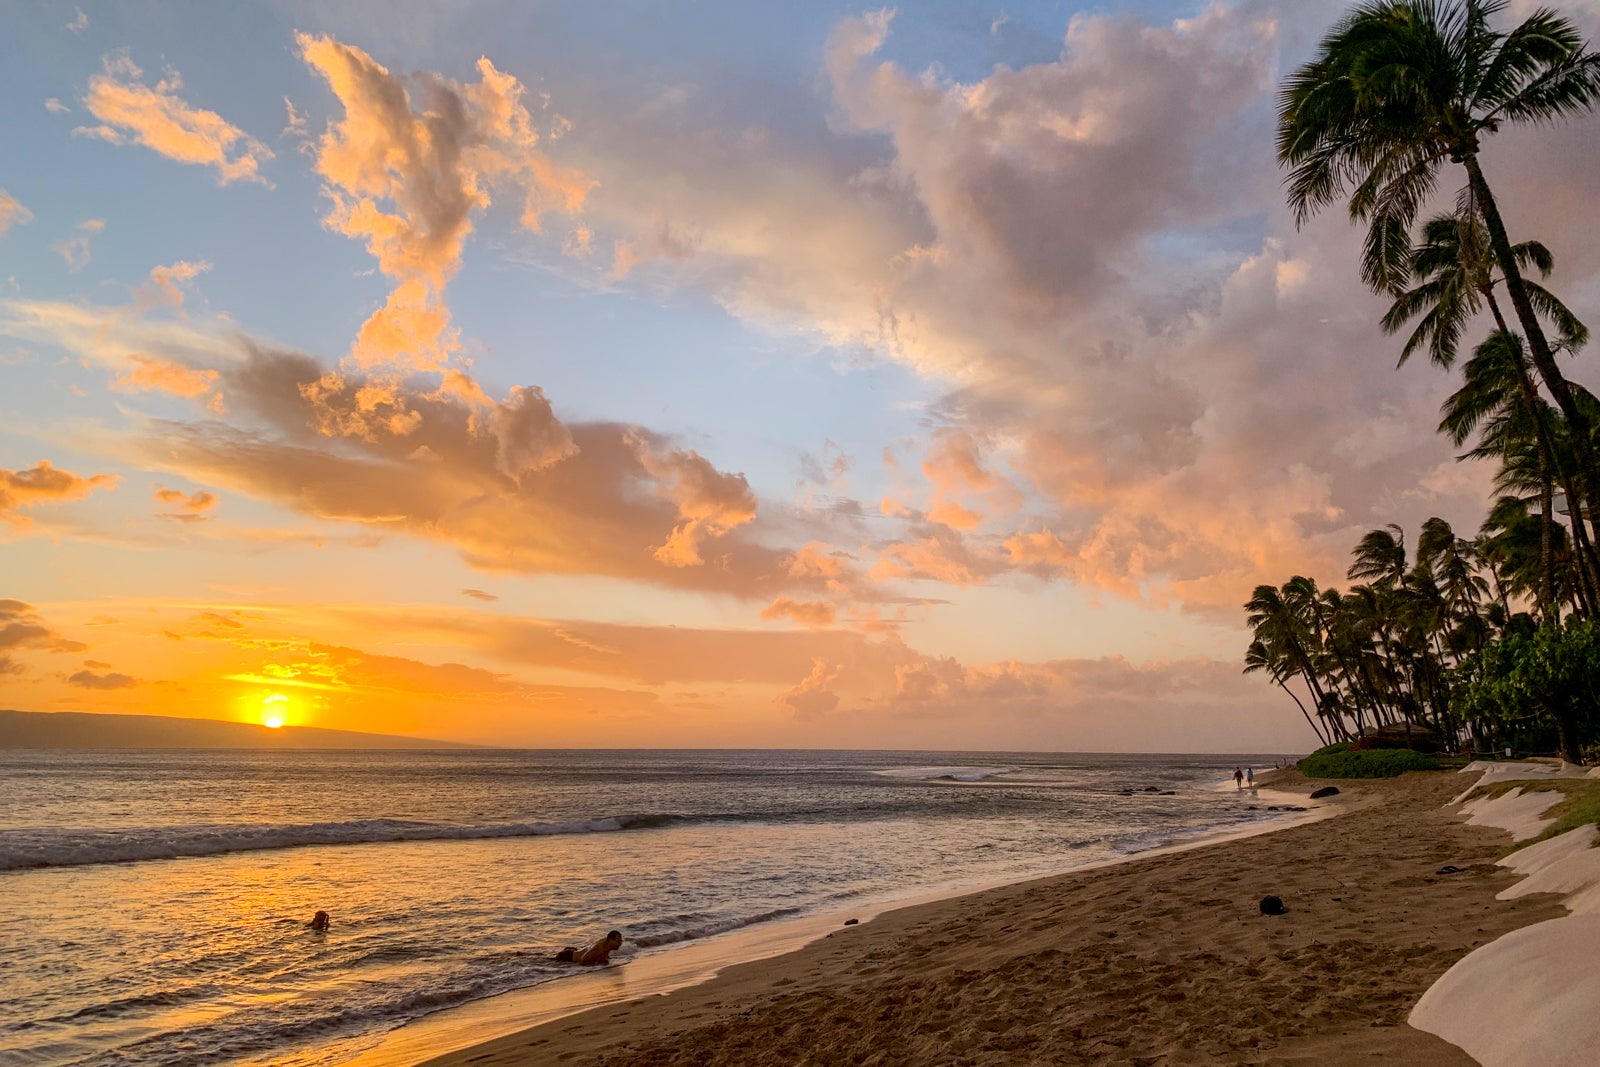 Sunset on the beach at the Hyatt Regency Maui. (Photo by Clint Henderson/The Points Guy)